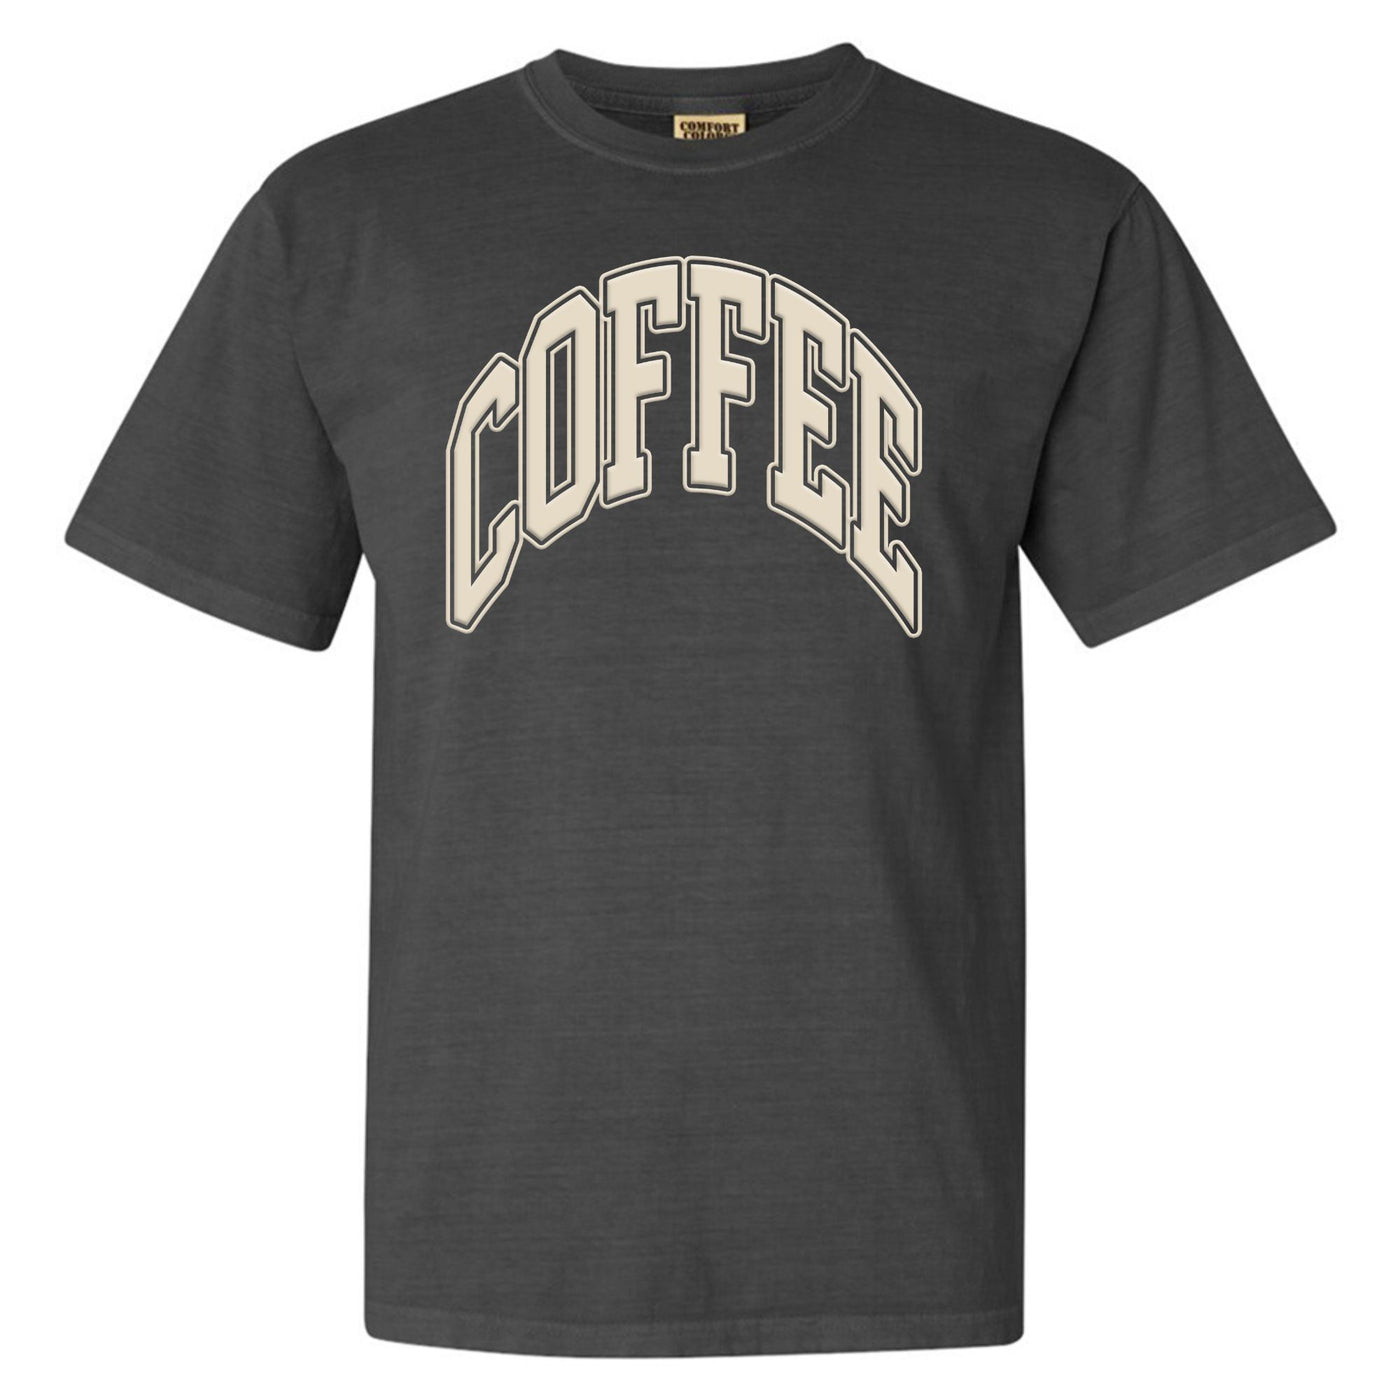 'Coffee' PUFF T-Shirt